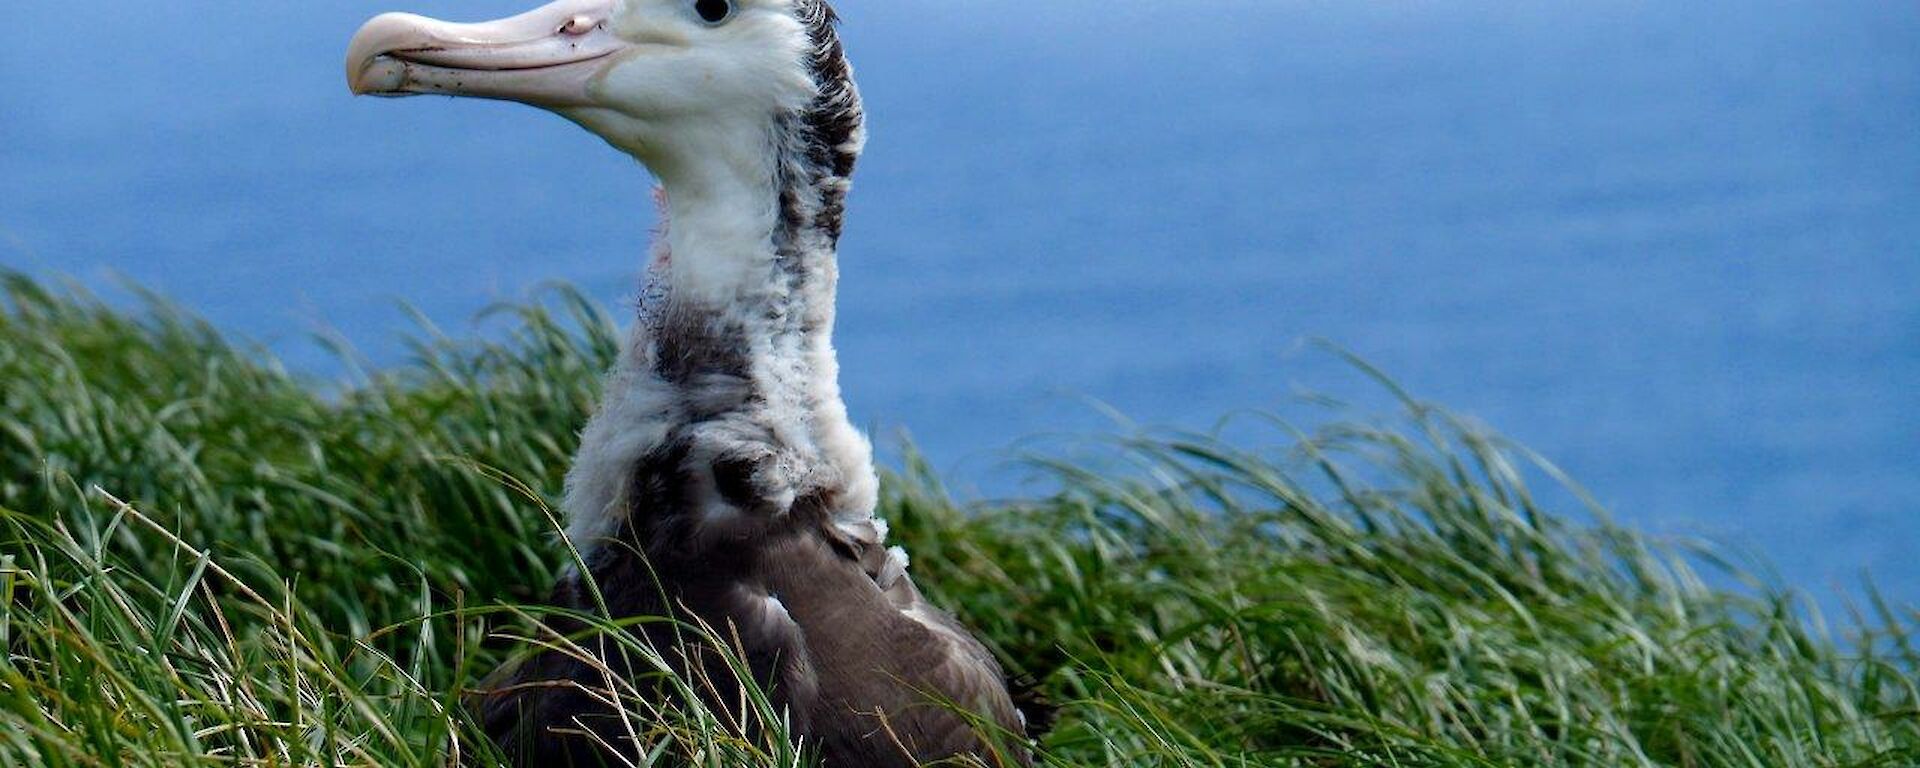 Wandering albatross chick sitting in the vegetation